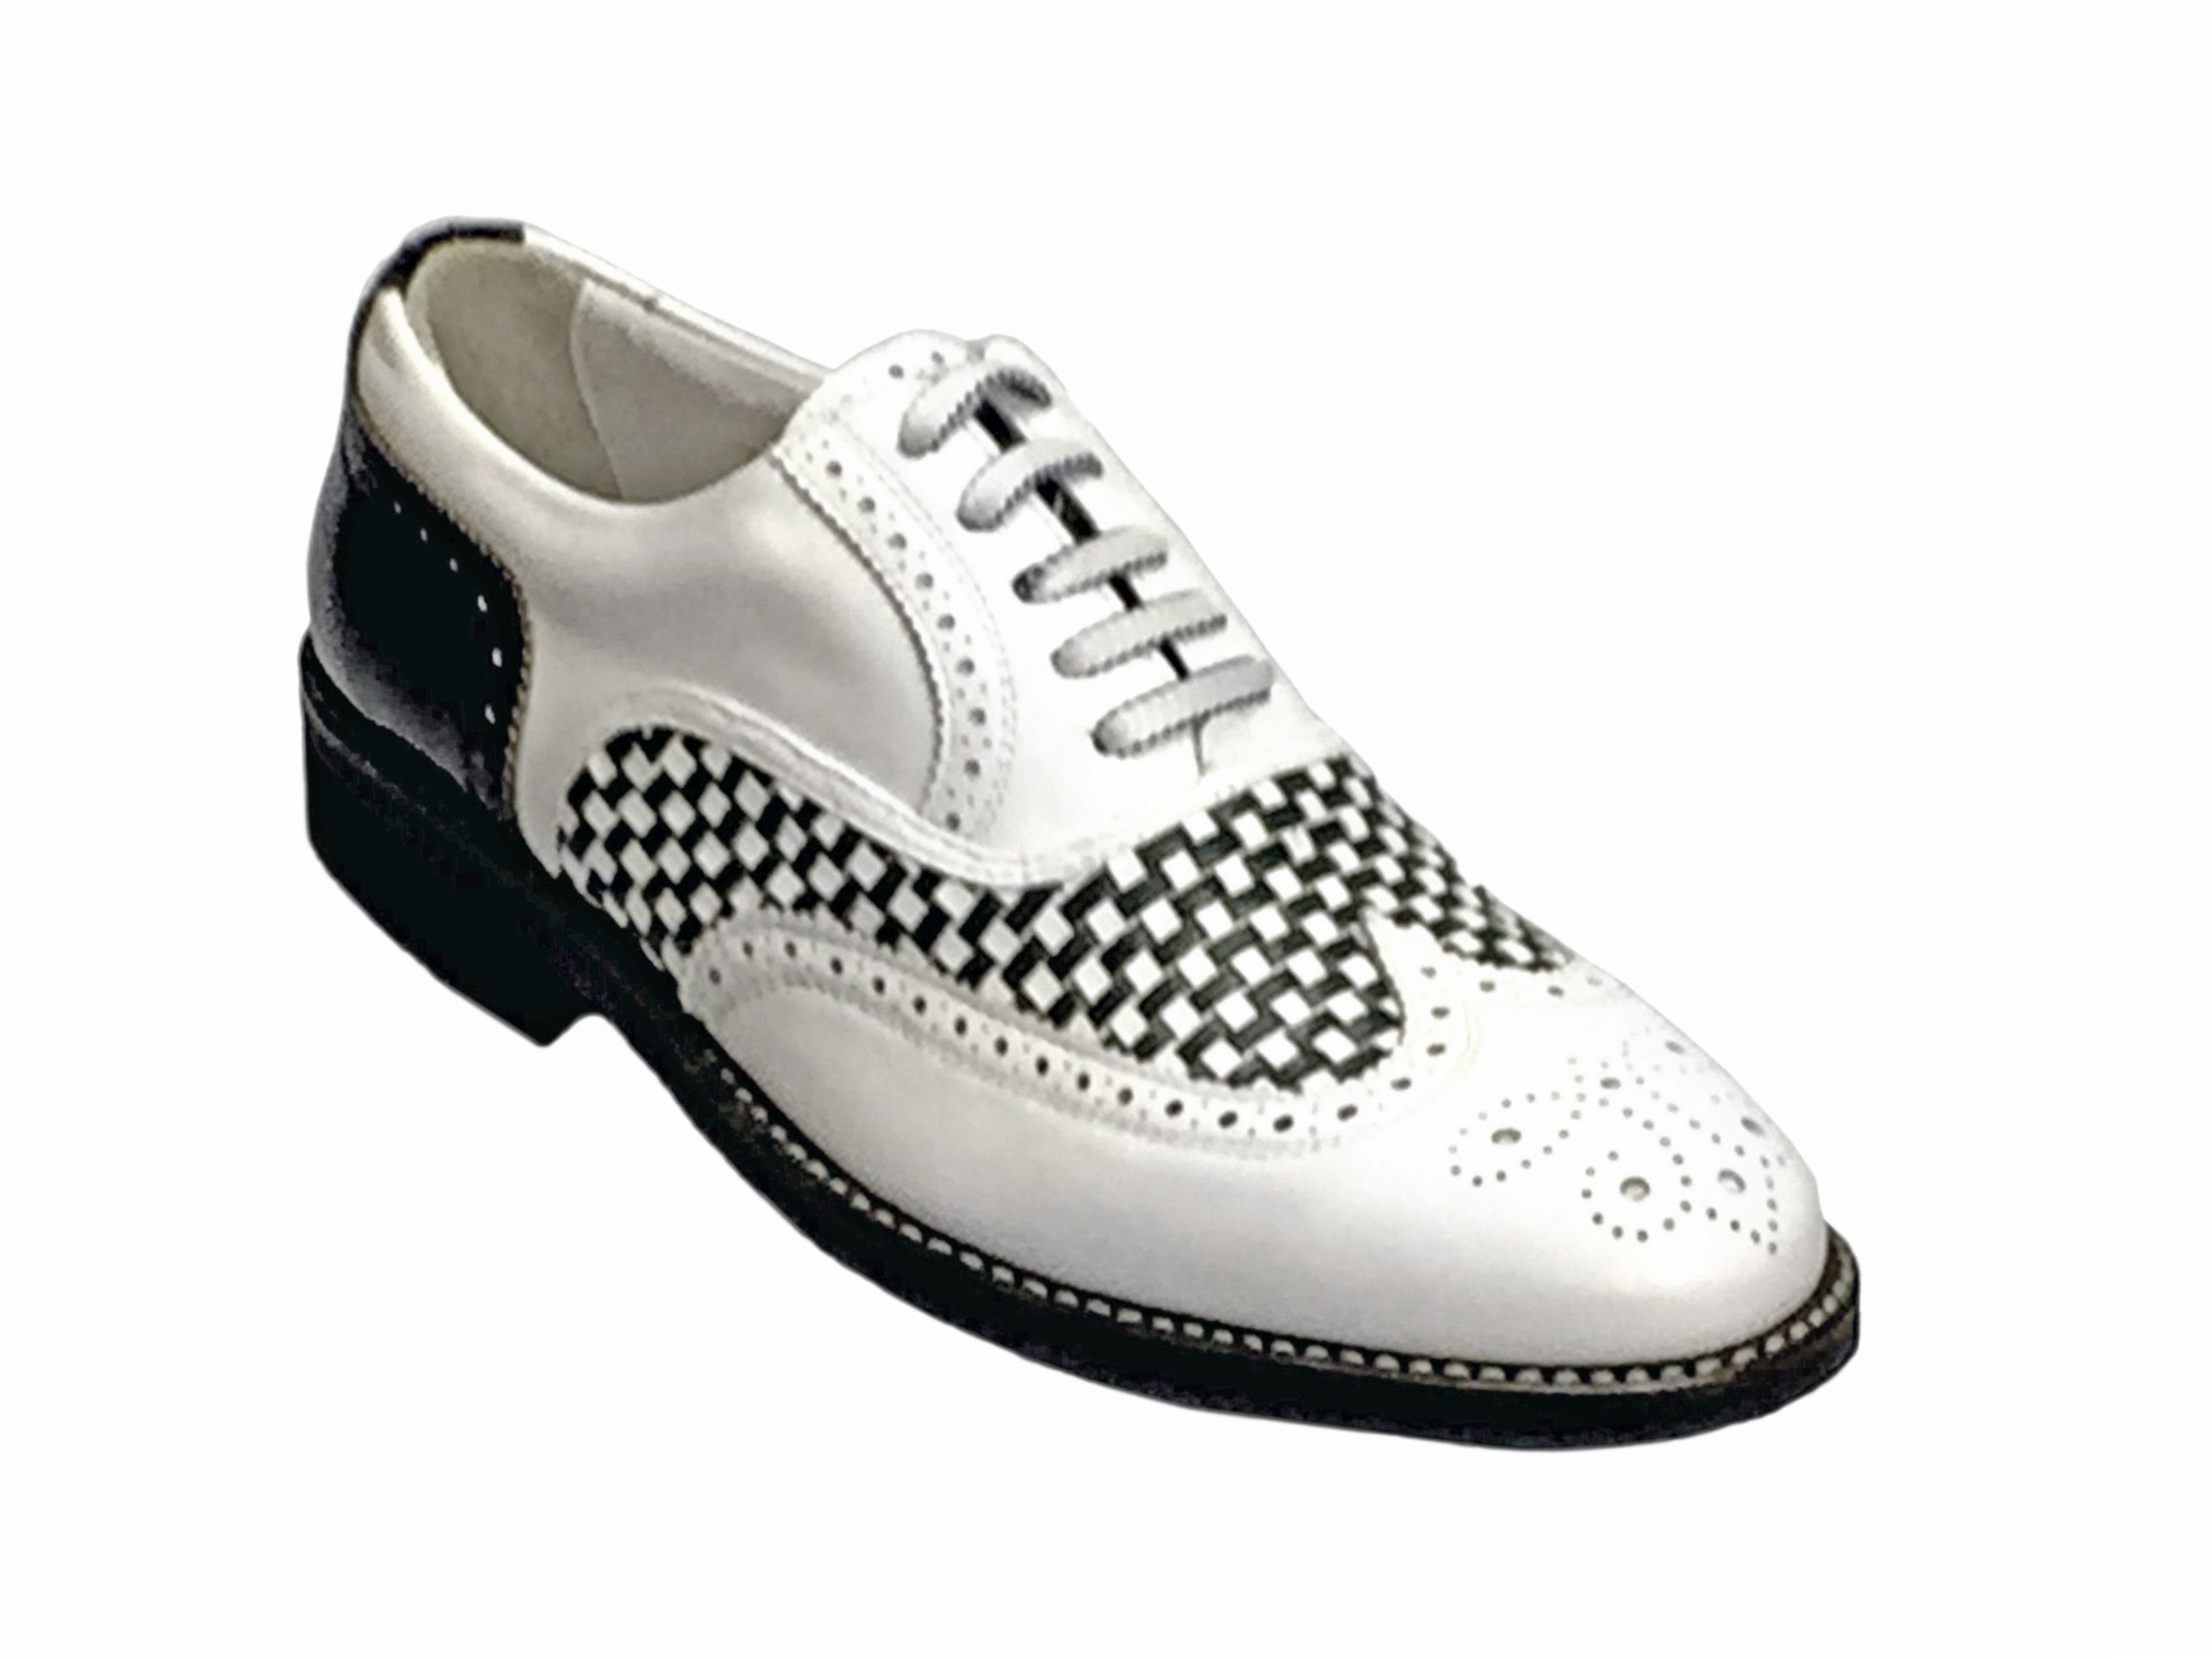 Fresco Golf Spiked Golf Shoes